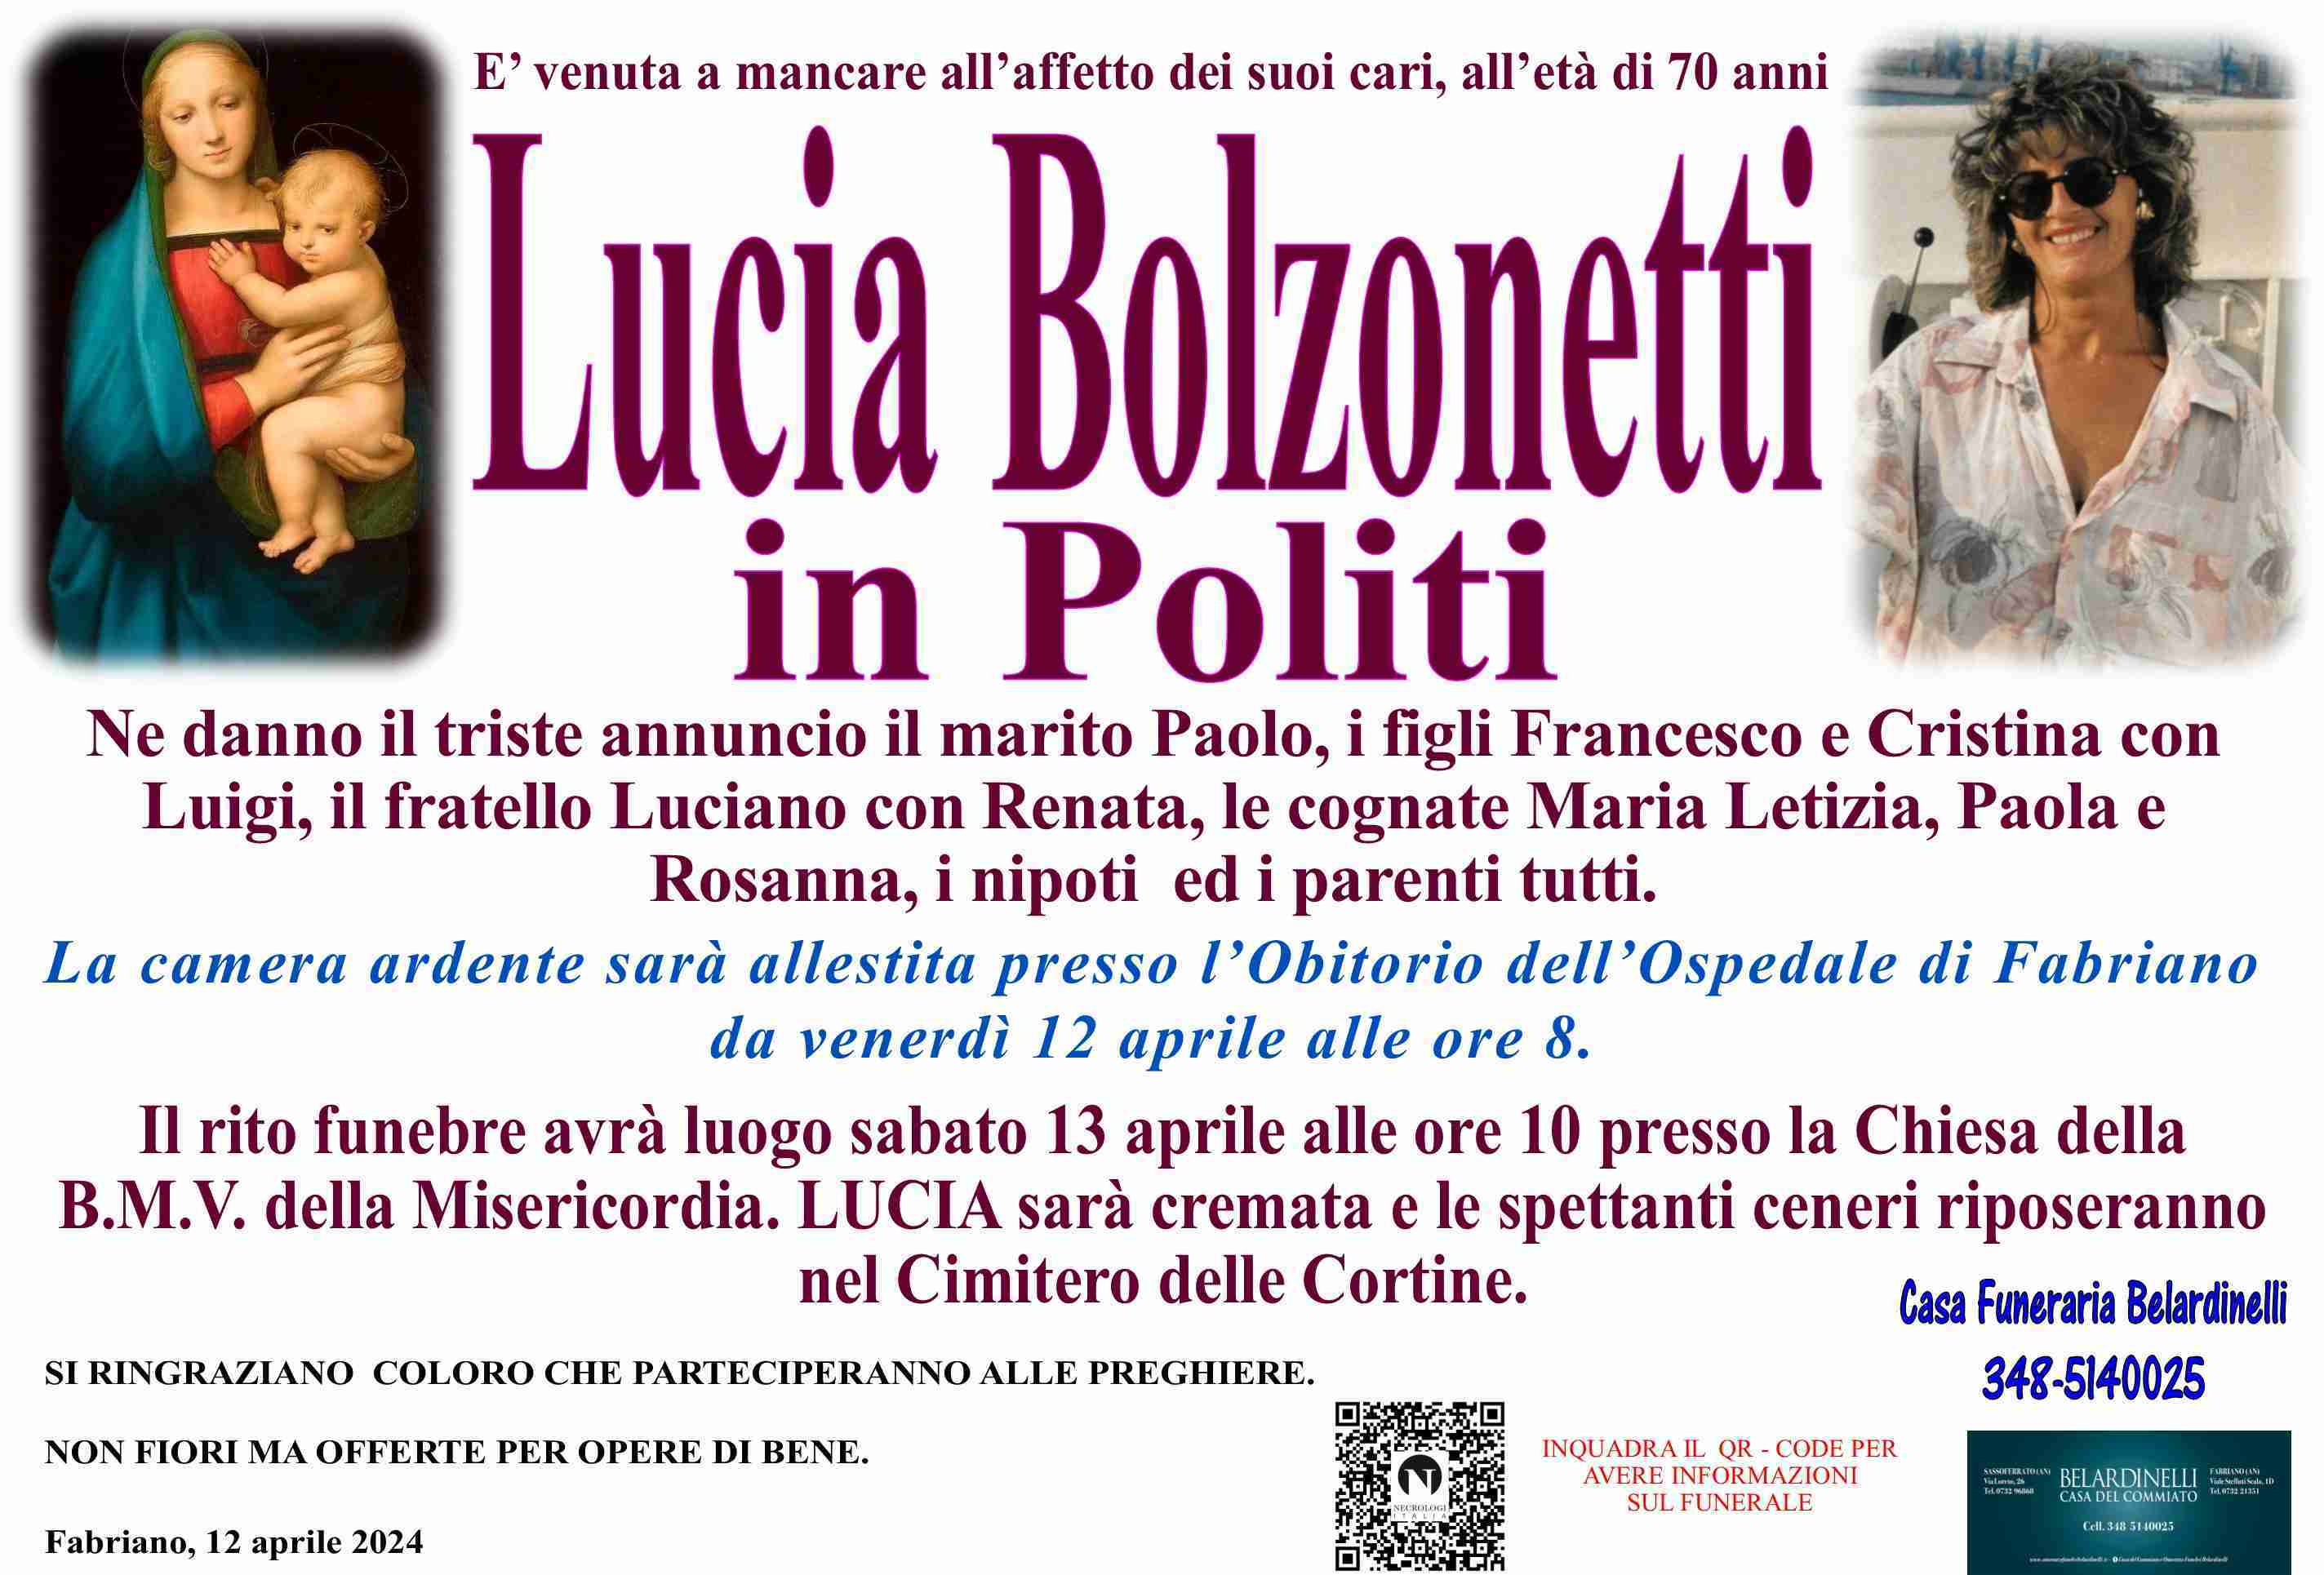 Lucia Bolzonetti